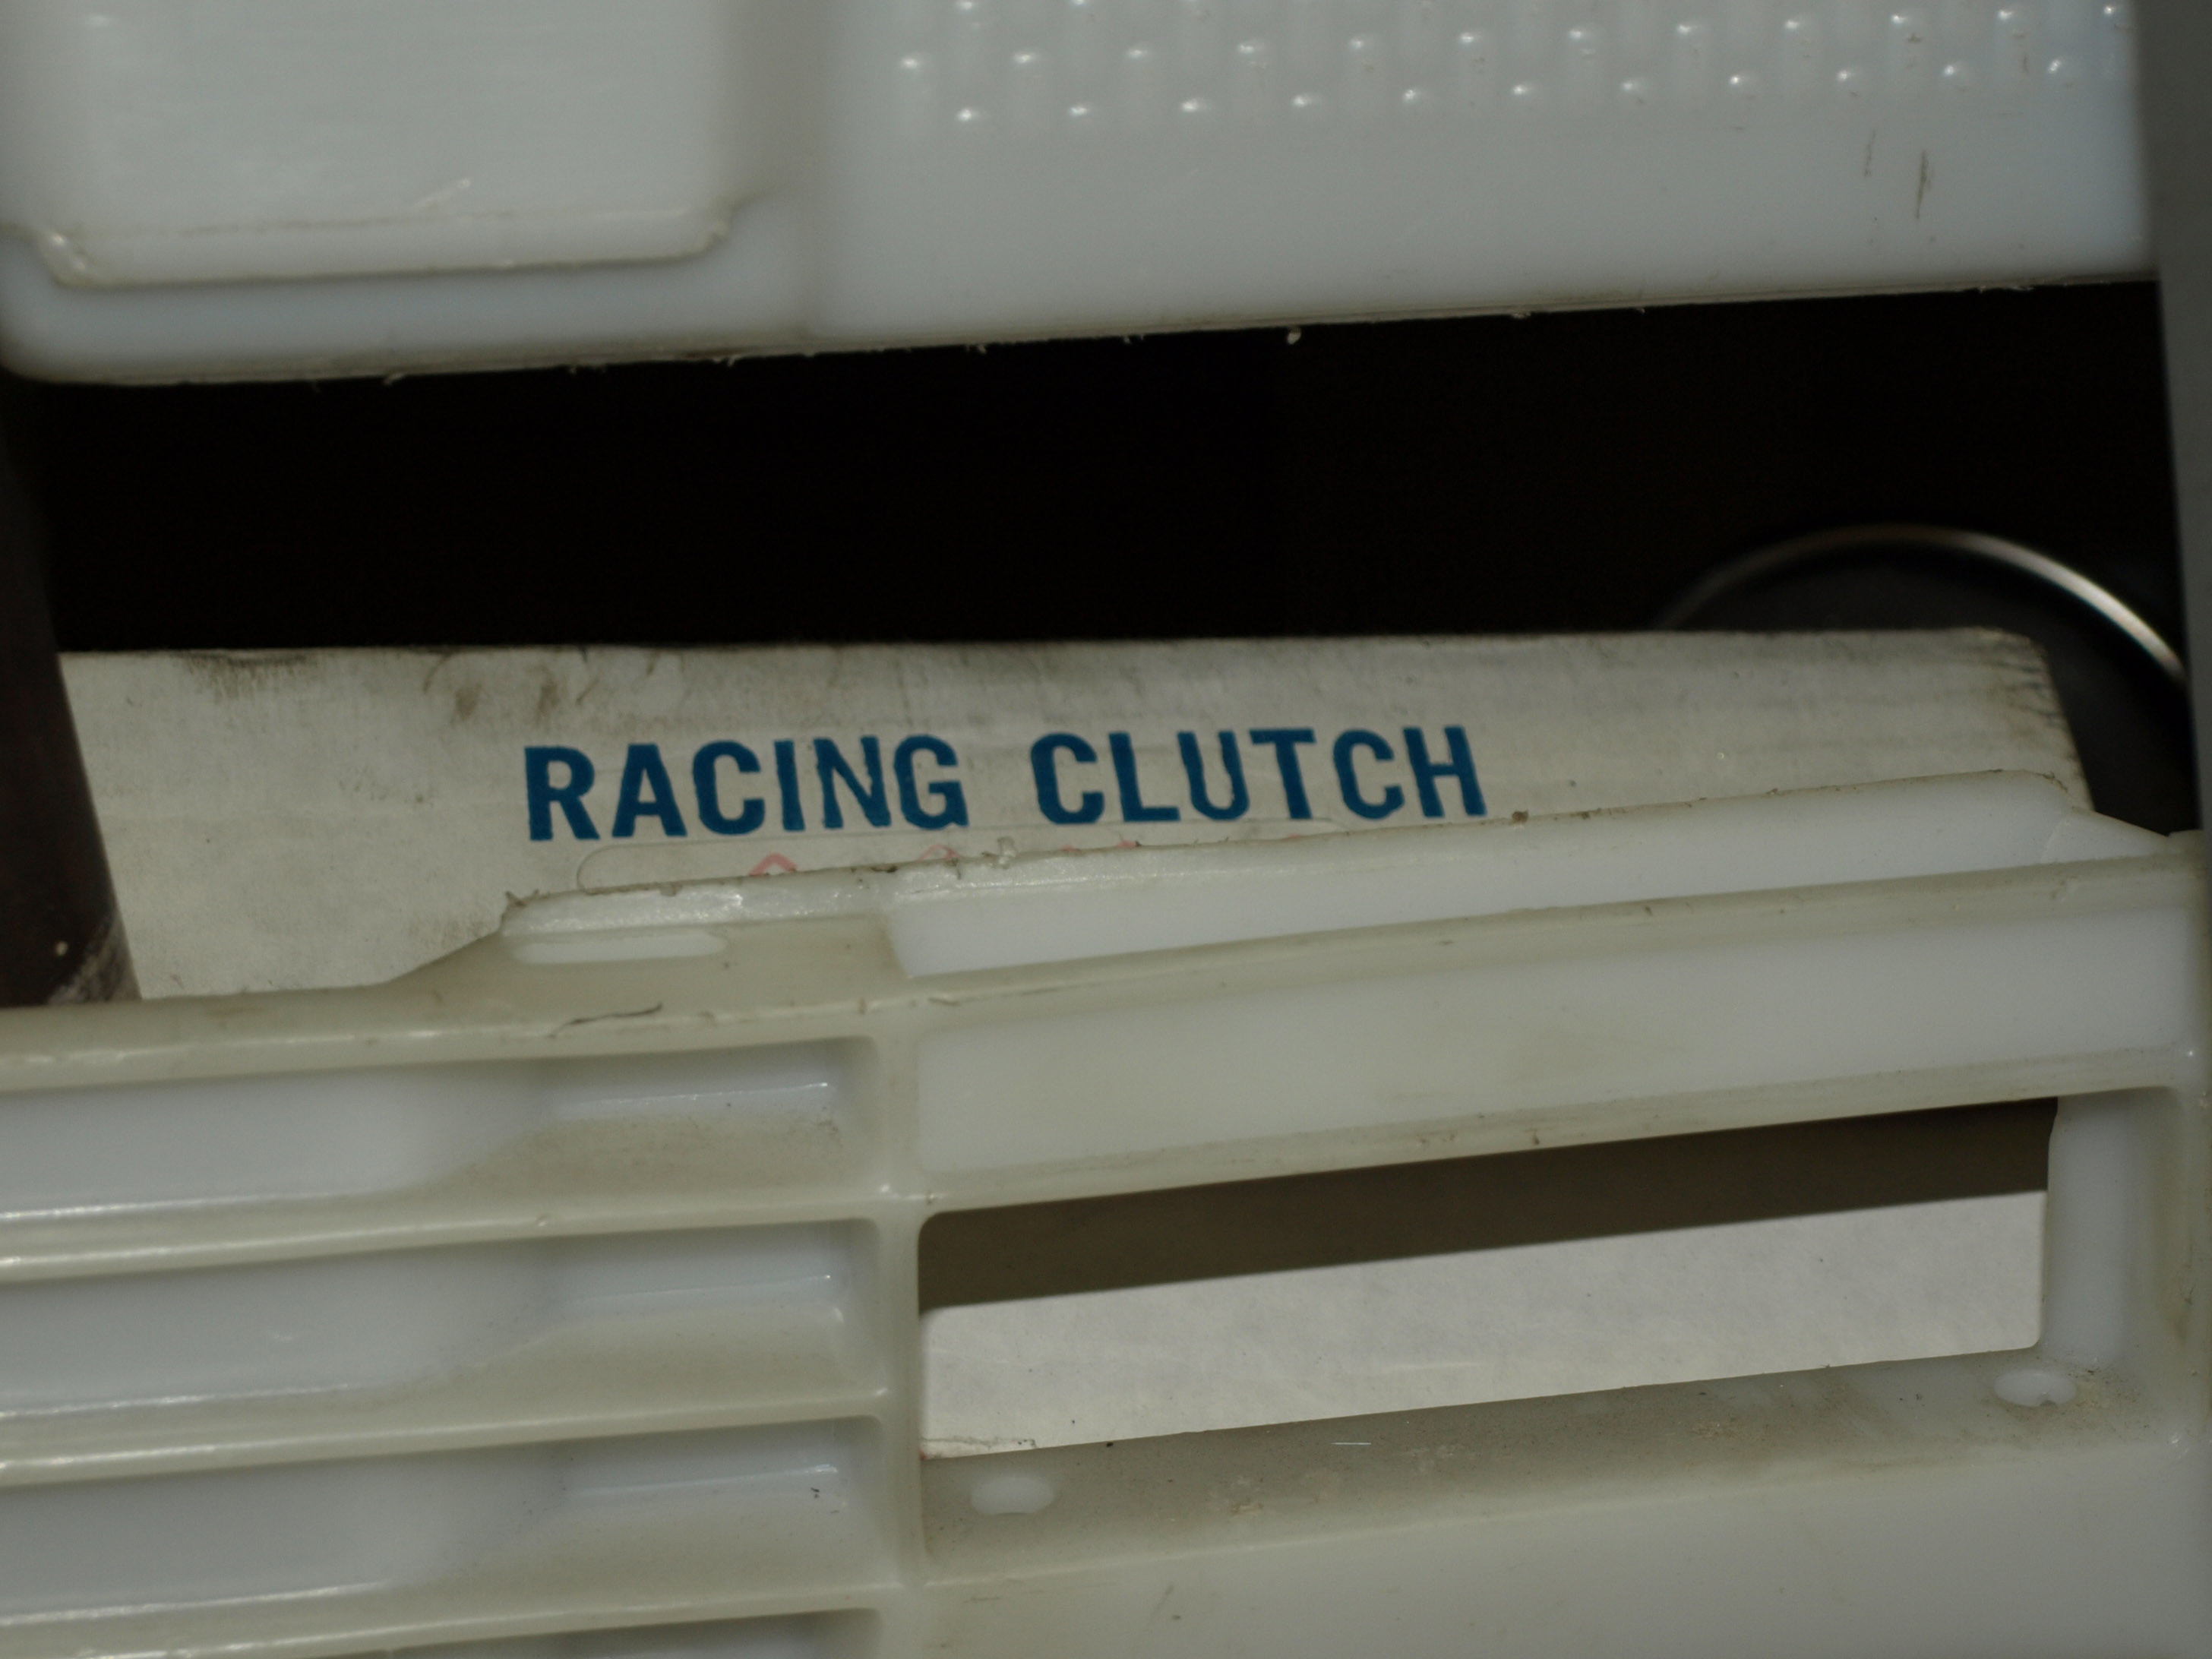 Starletin talvihuolto 2007-2008, Tilton 7.25" kytkin.  Racing clutch.